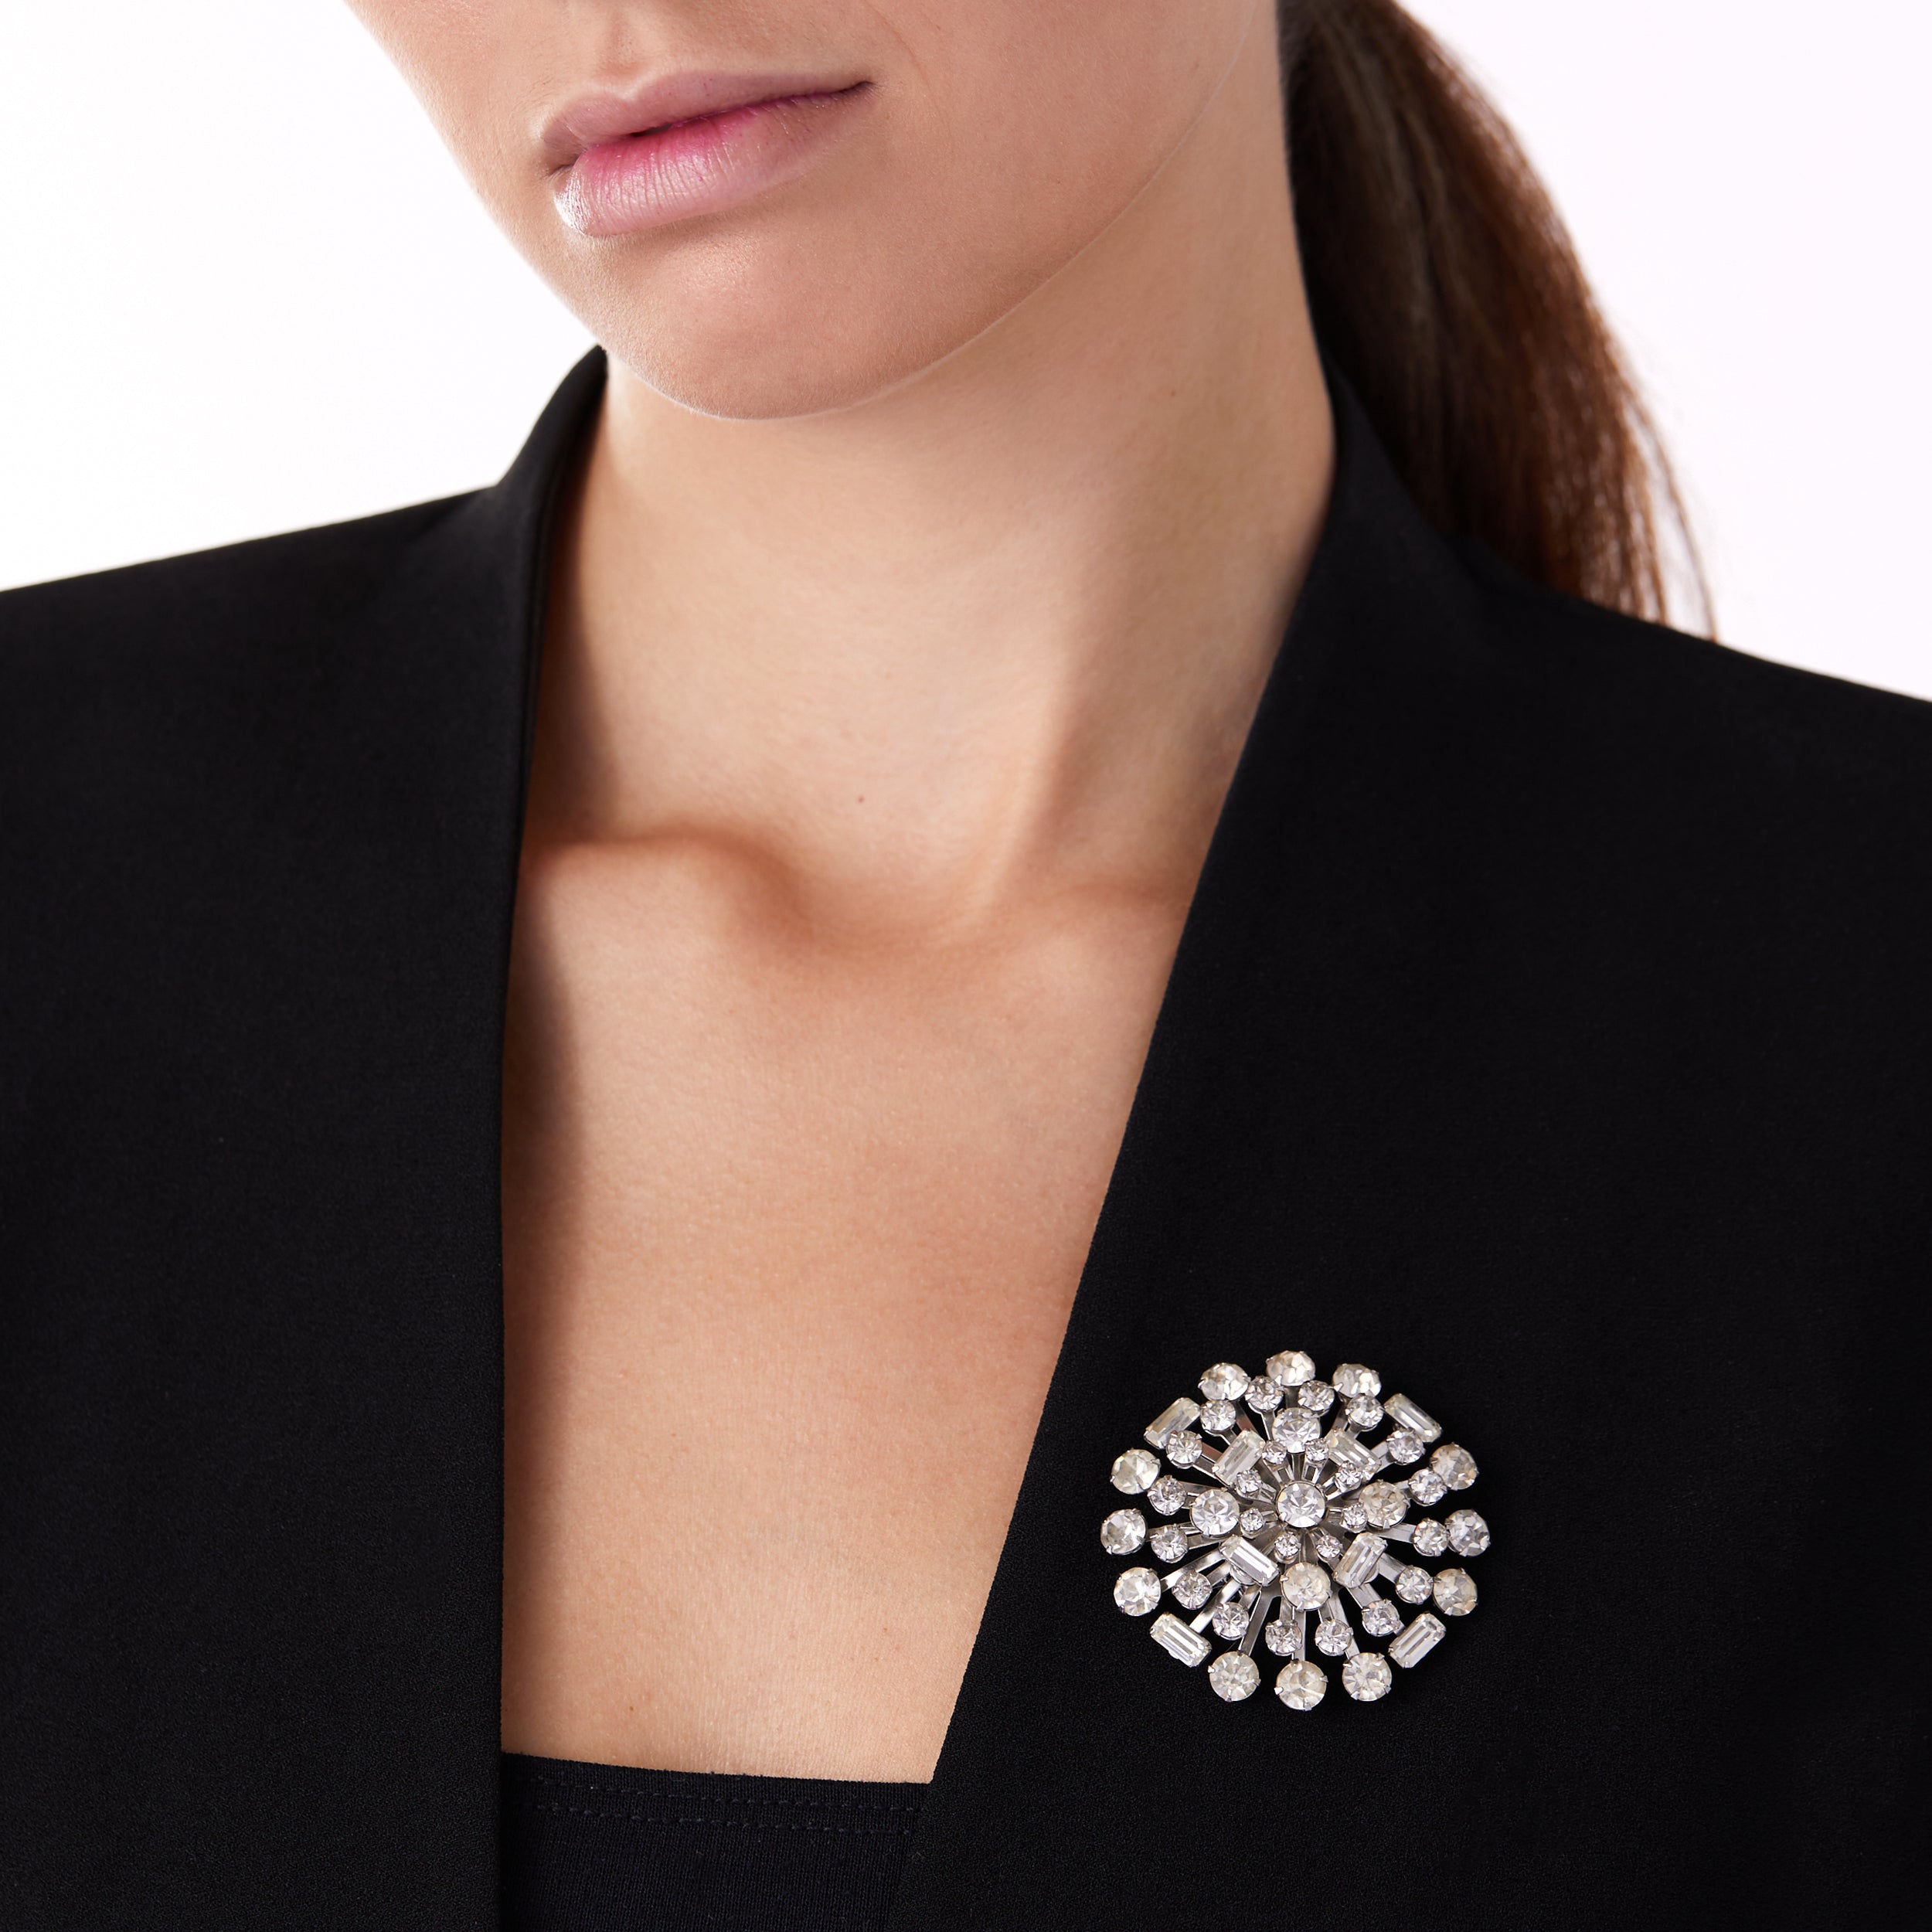 Vintage costume starburst brooch pin worn on woman’s lapel